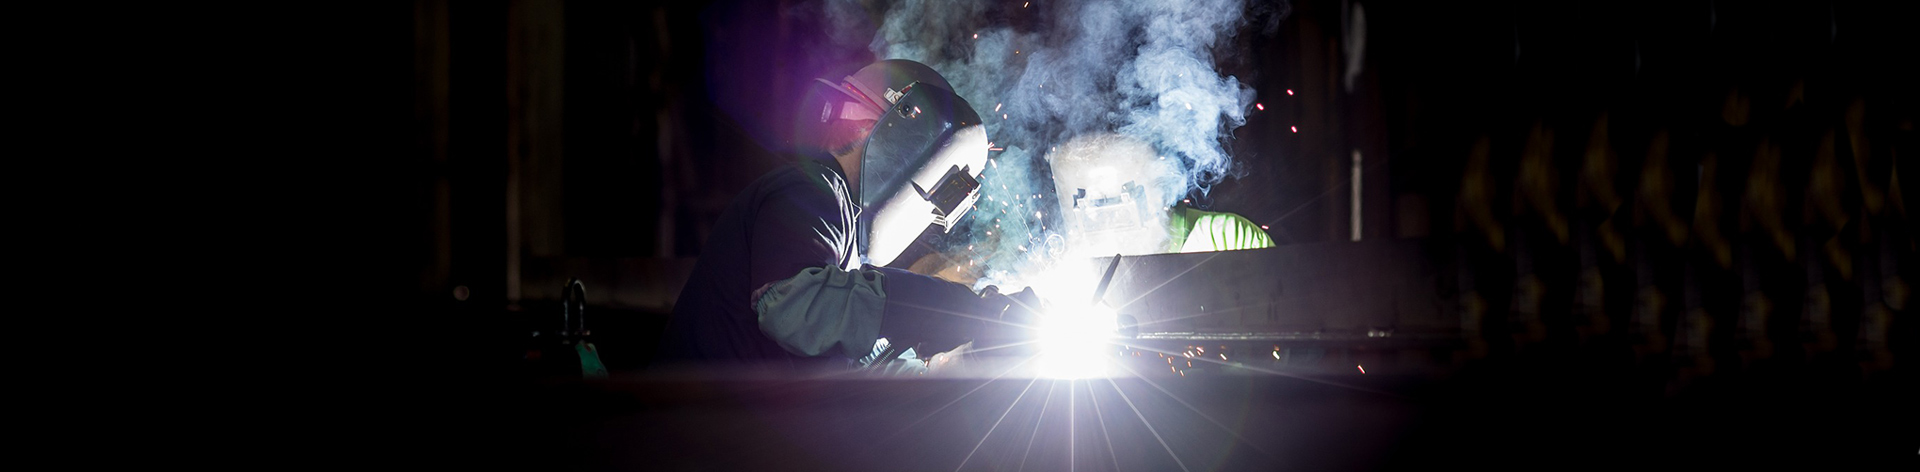 welding training courses